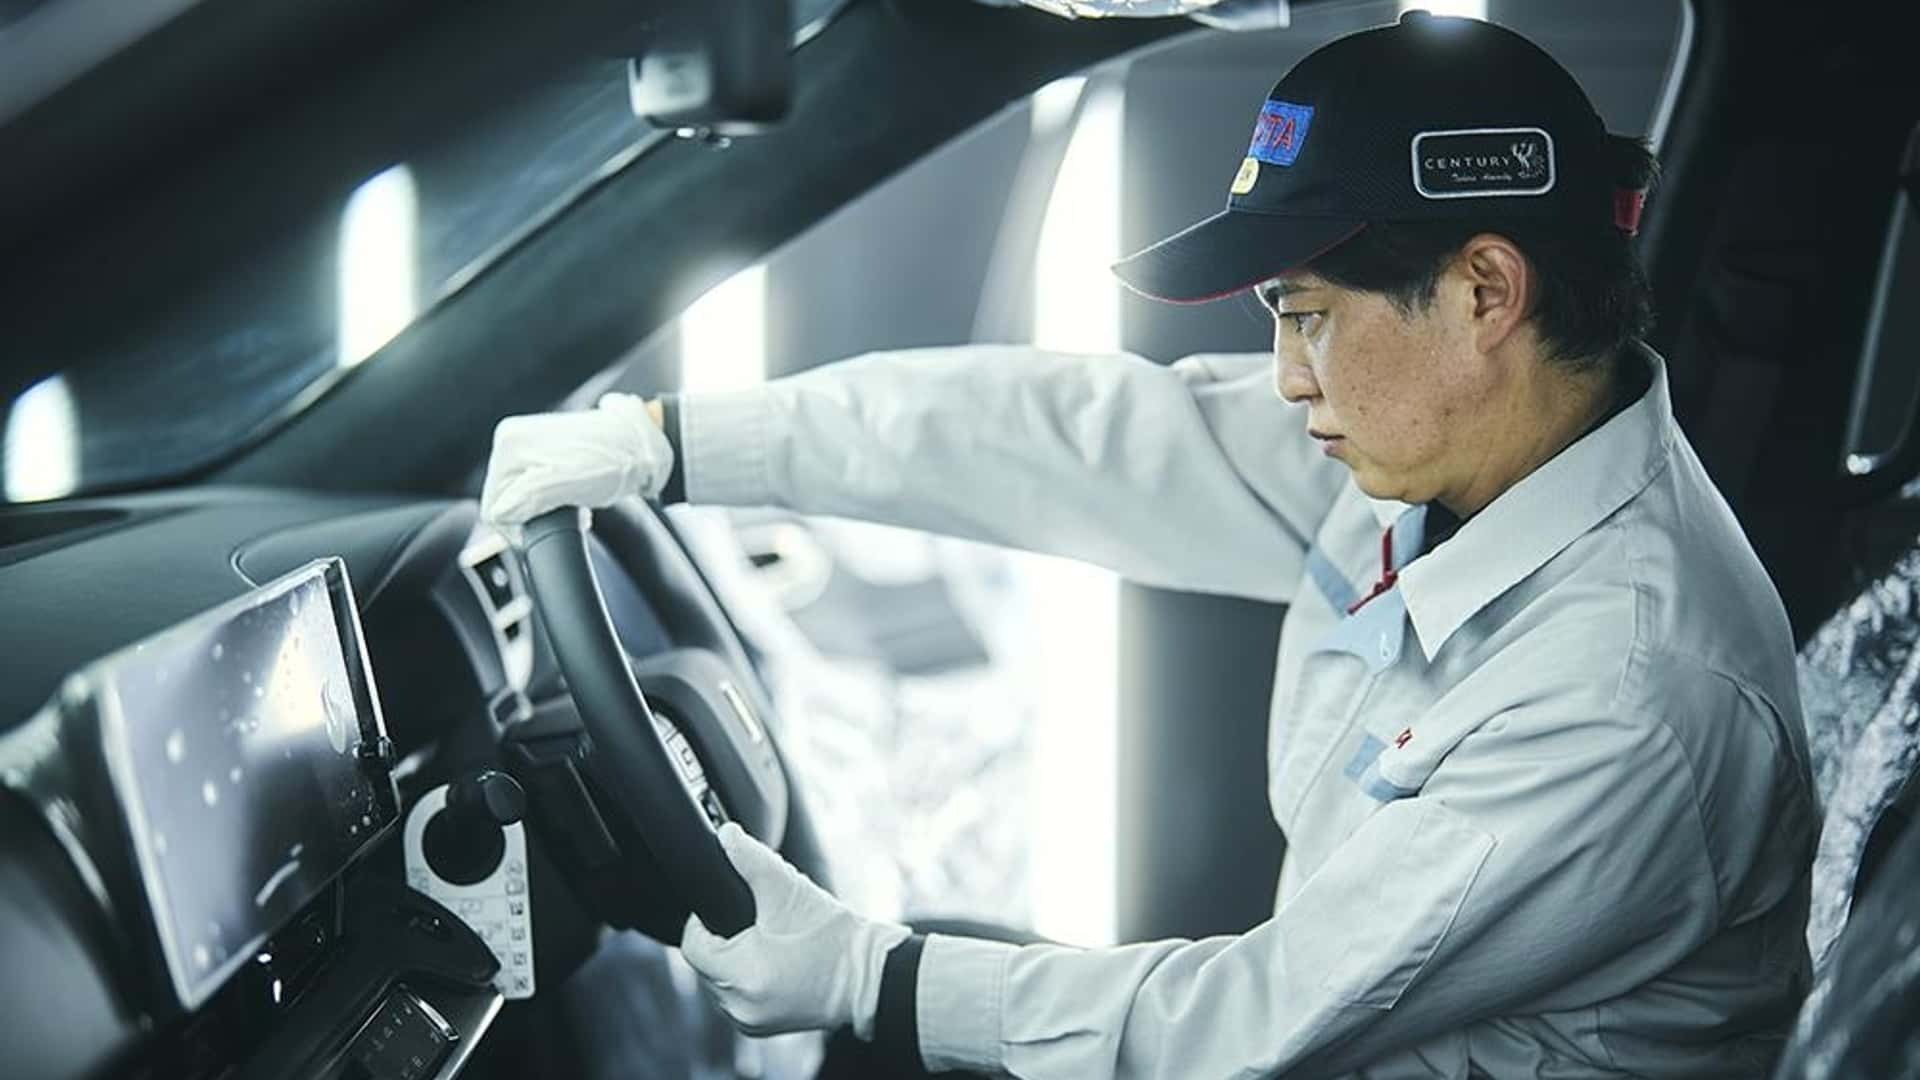 Toyota Century SUV inspection